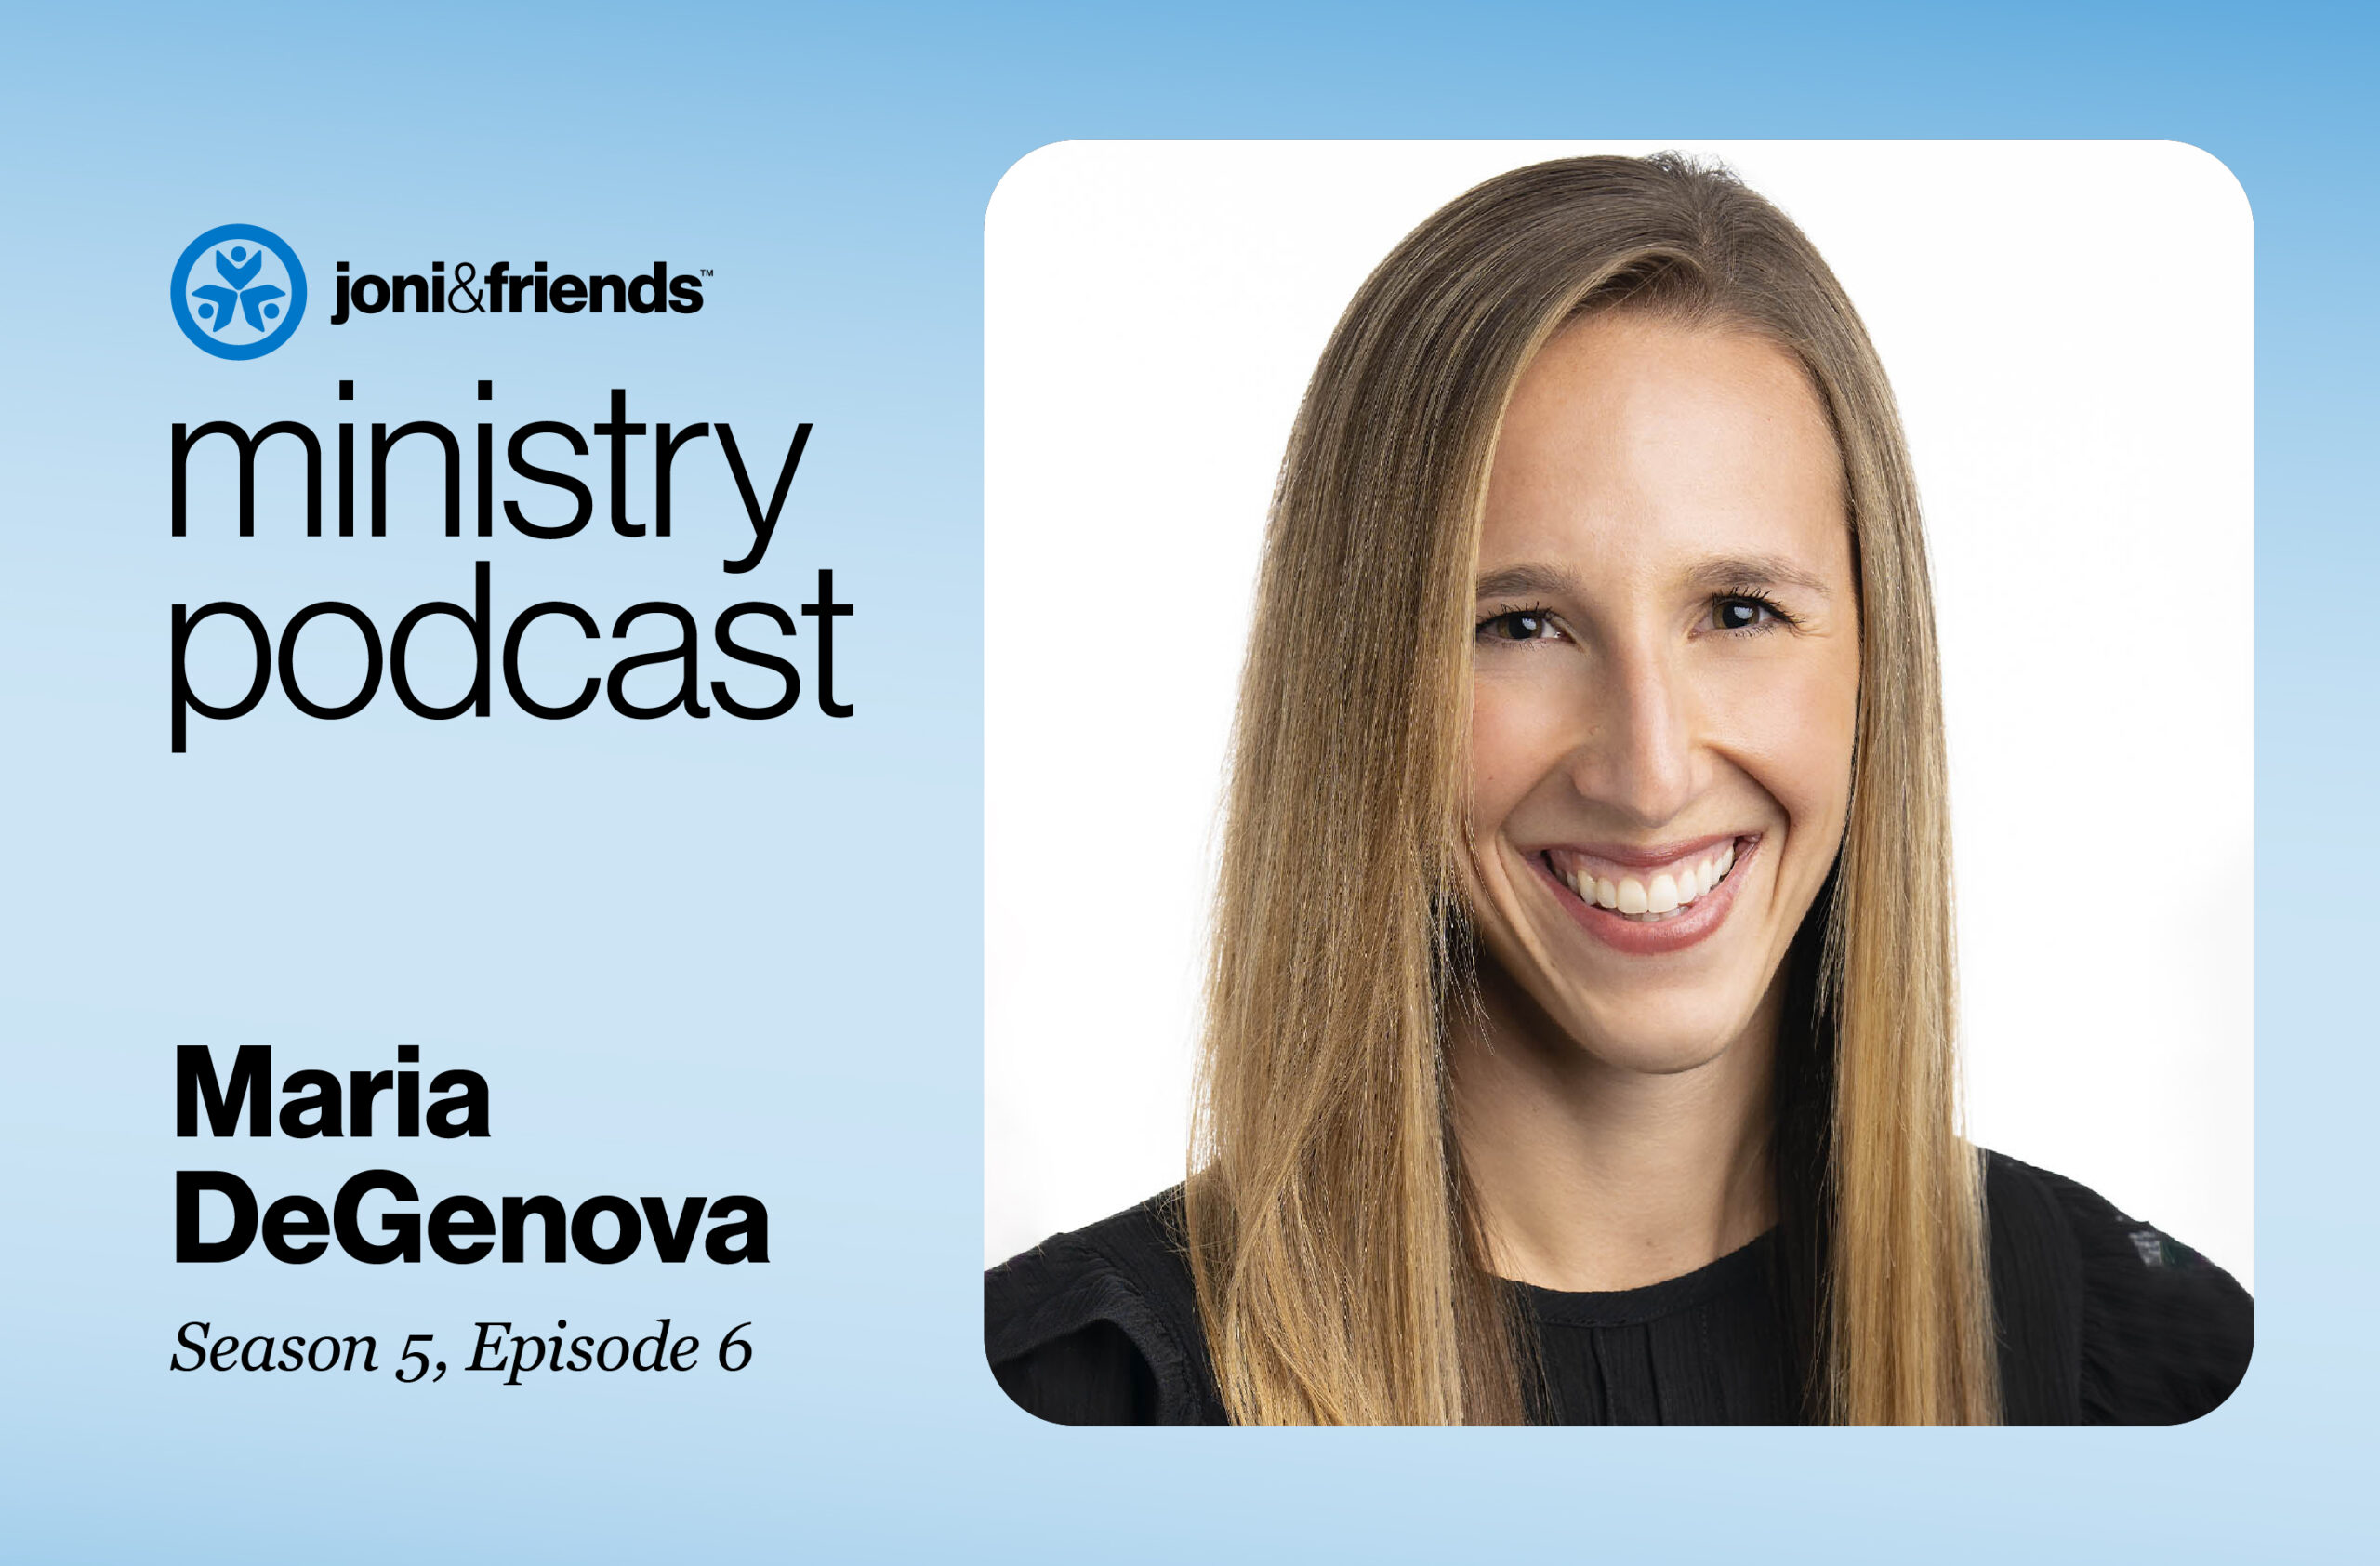 Joni and Friends Ministry Podcast. Maria DeGenova season 5, episode 6.